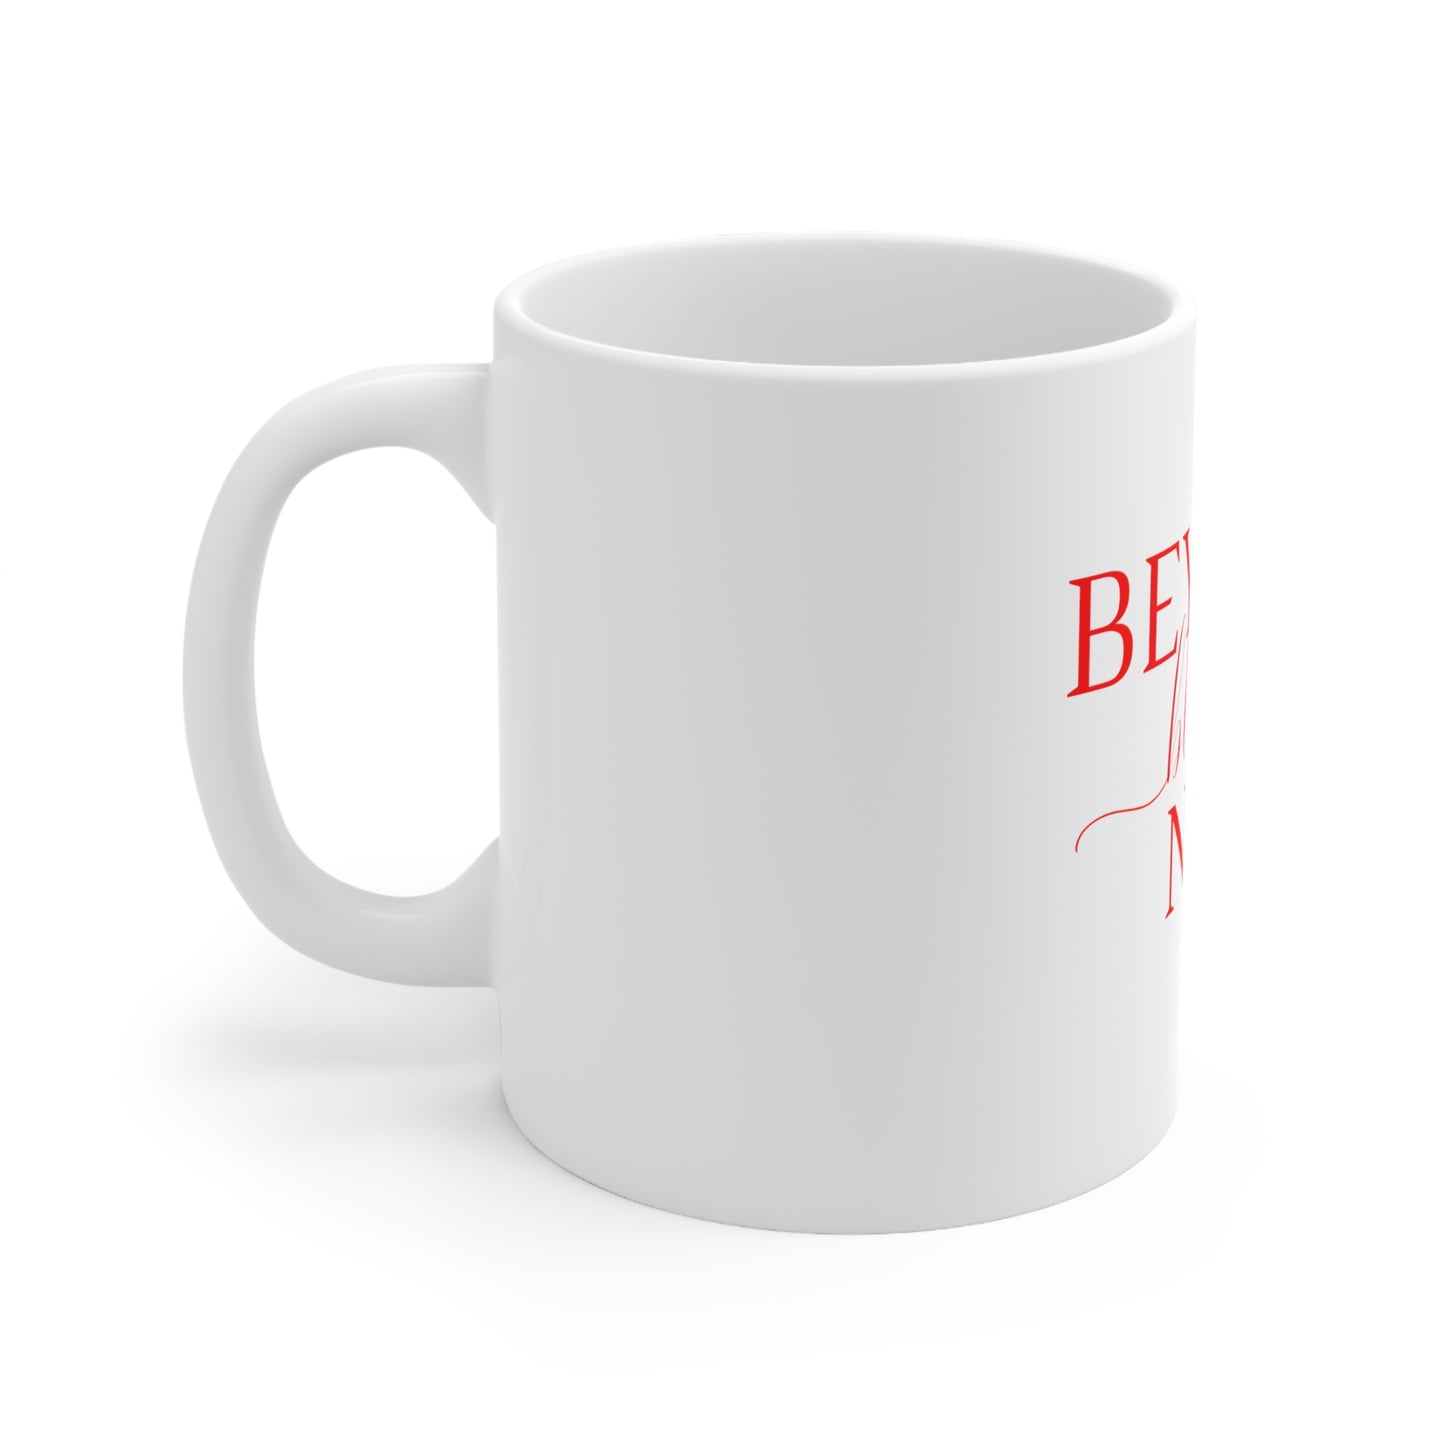 Beyond Blessed NCS - Plain Ceramic Mug 11oz - Red